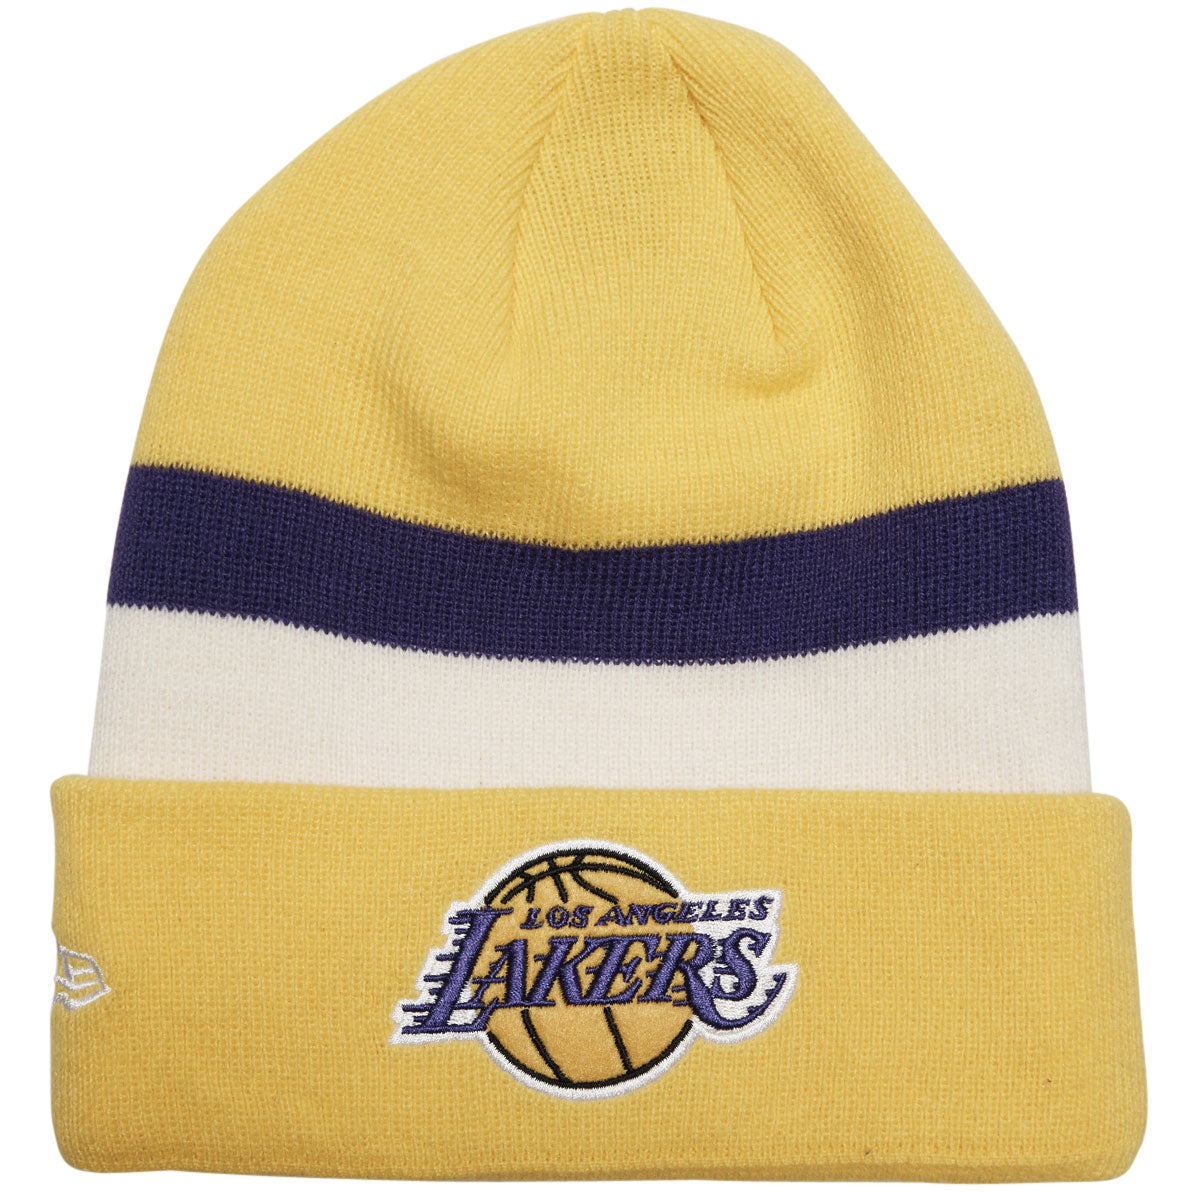 New Era Knit Medium Retro Cuff Knit Beanie - Los Angeles Lakers image 2